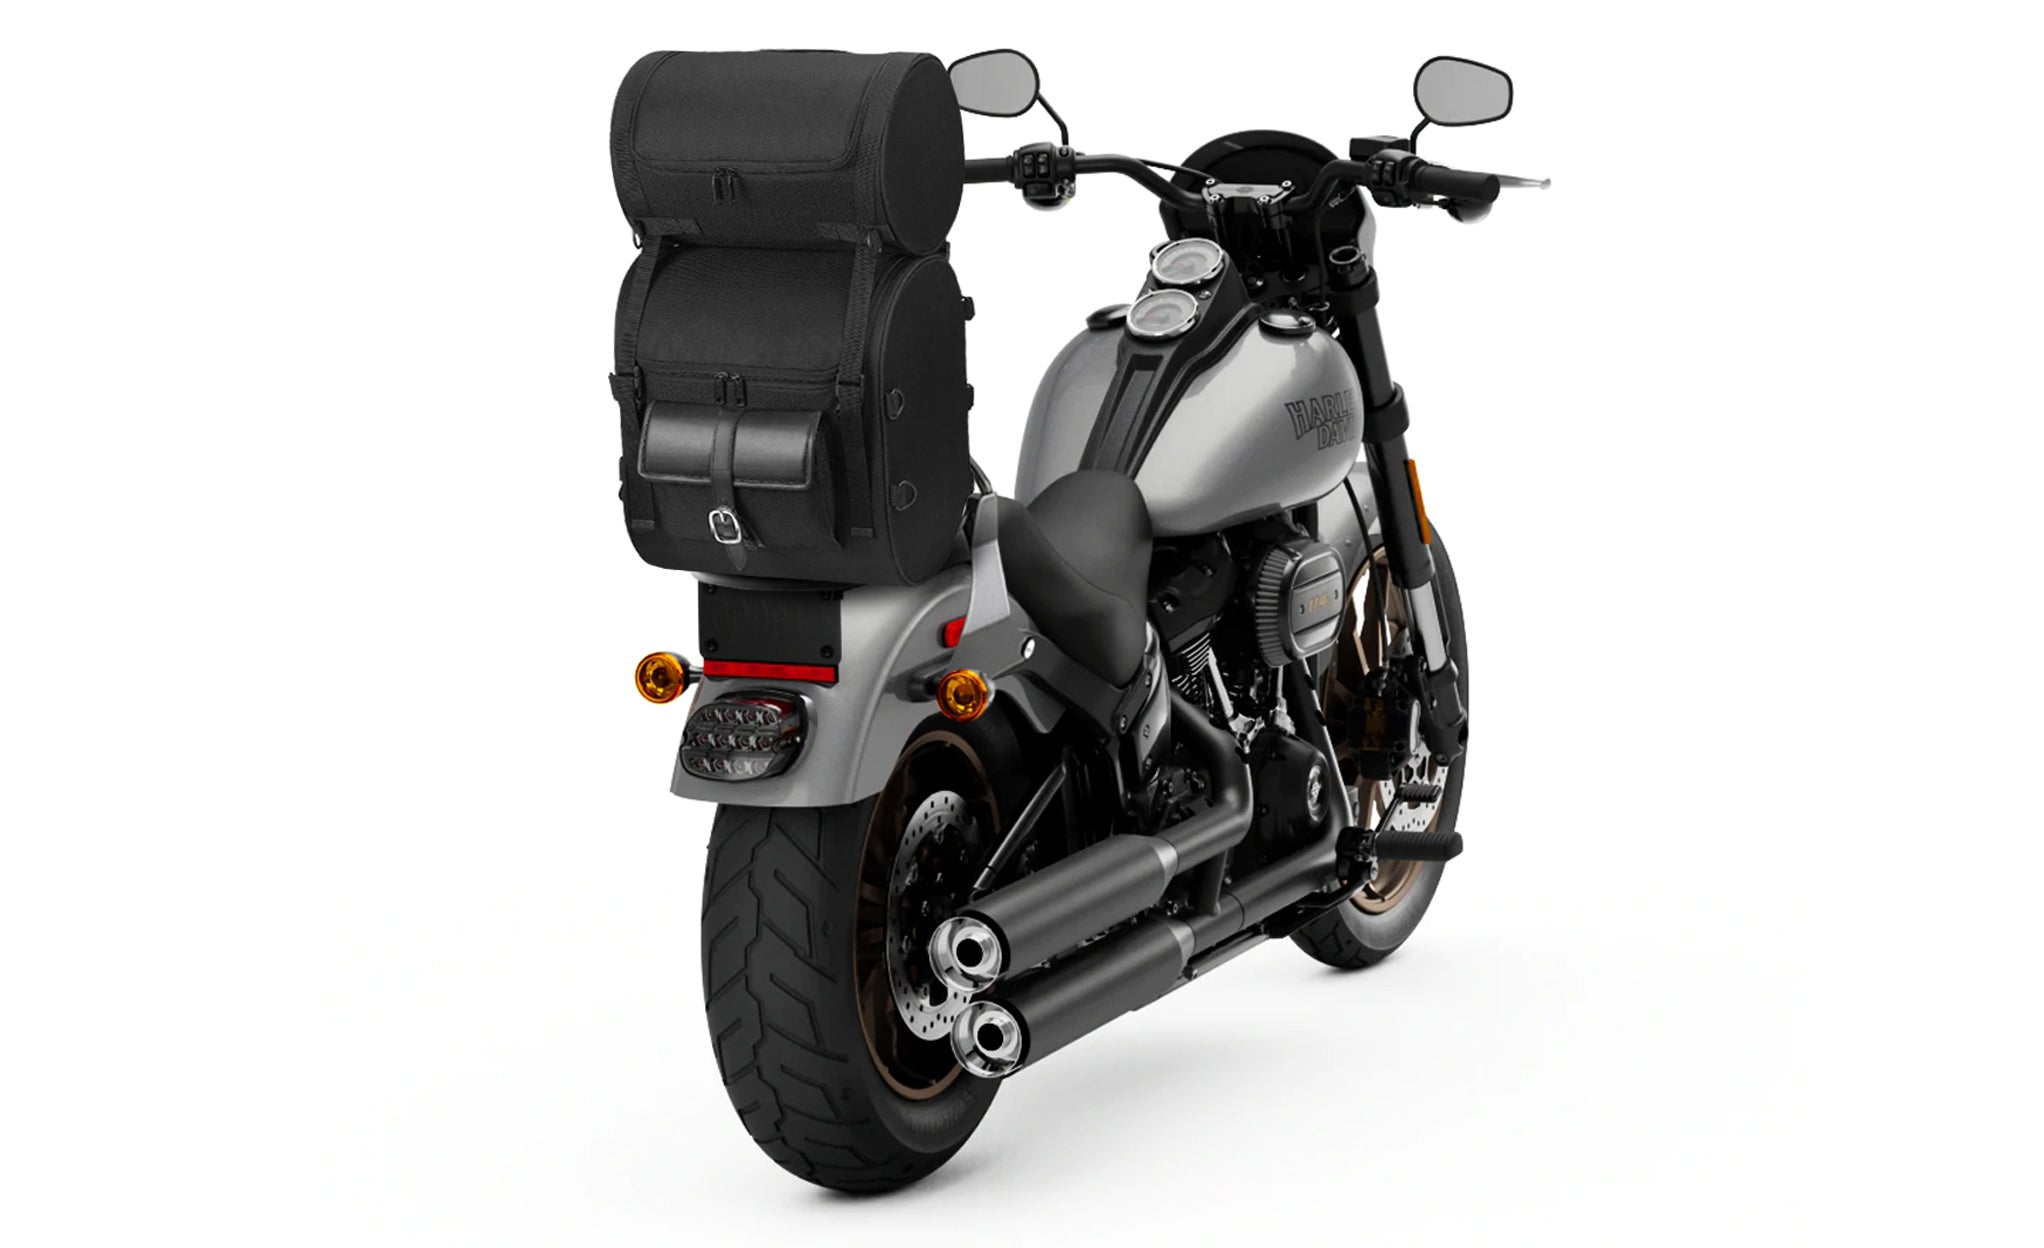 Viking Economy Line Medium Victory Motorcycle Sissy Bar Bag Bag on Bike View @expand